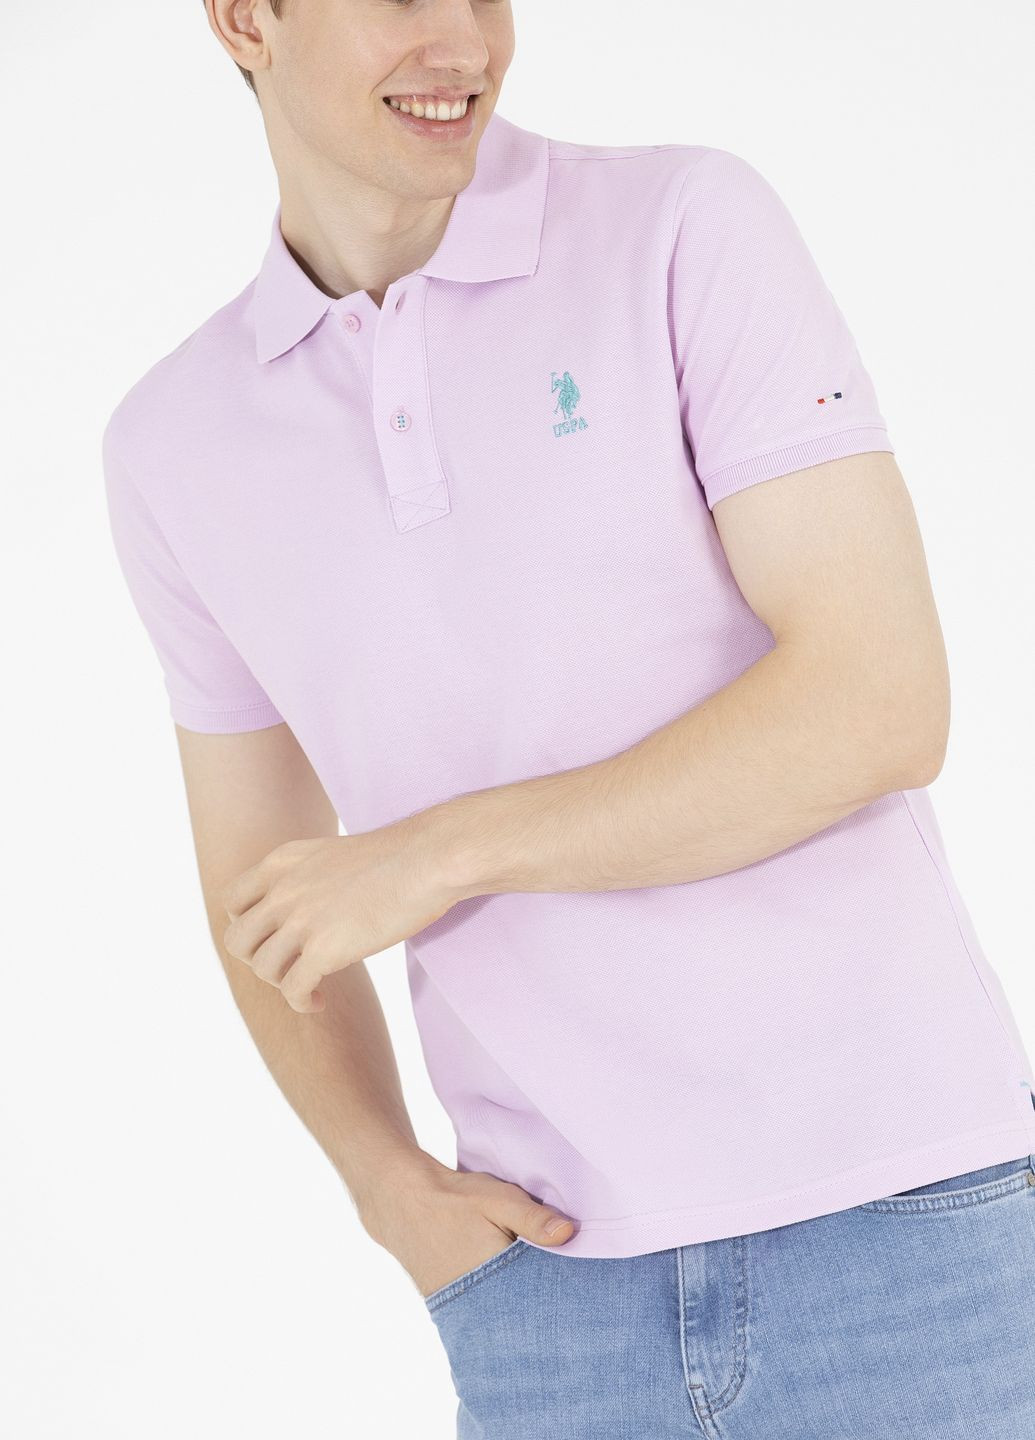 Розовая футболка-футболка поло мужское для мужчин U.S. Polo Assn.